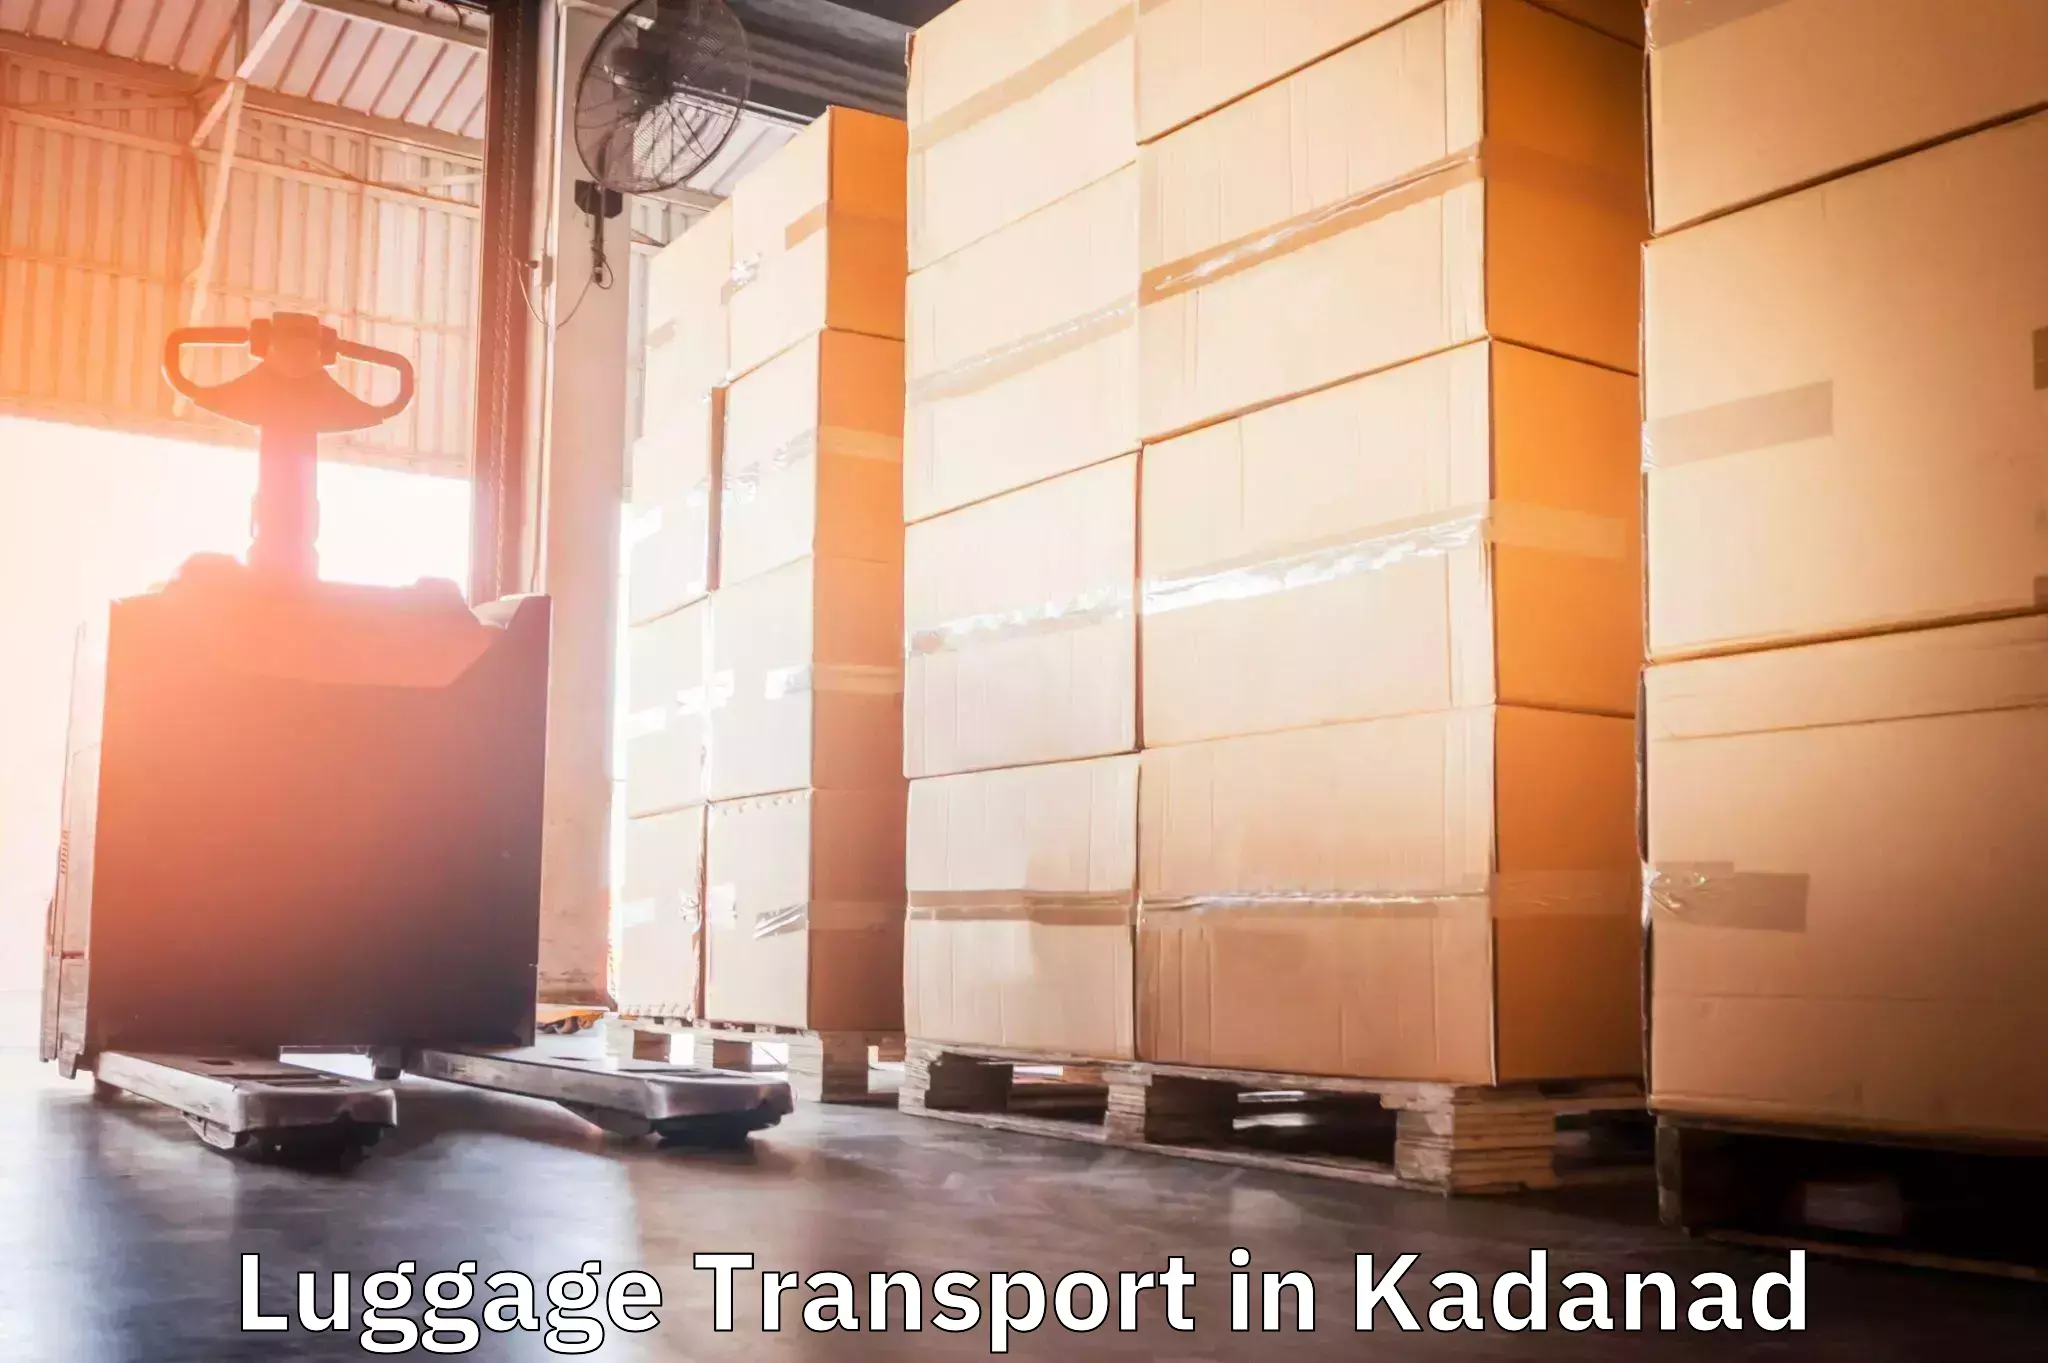 Luggage transport rates in Kadanad